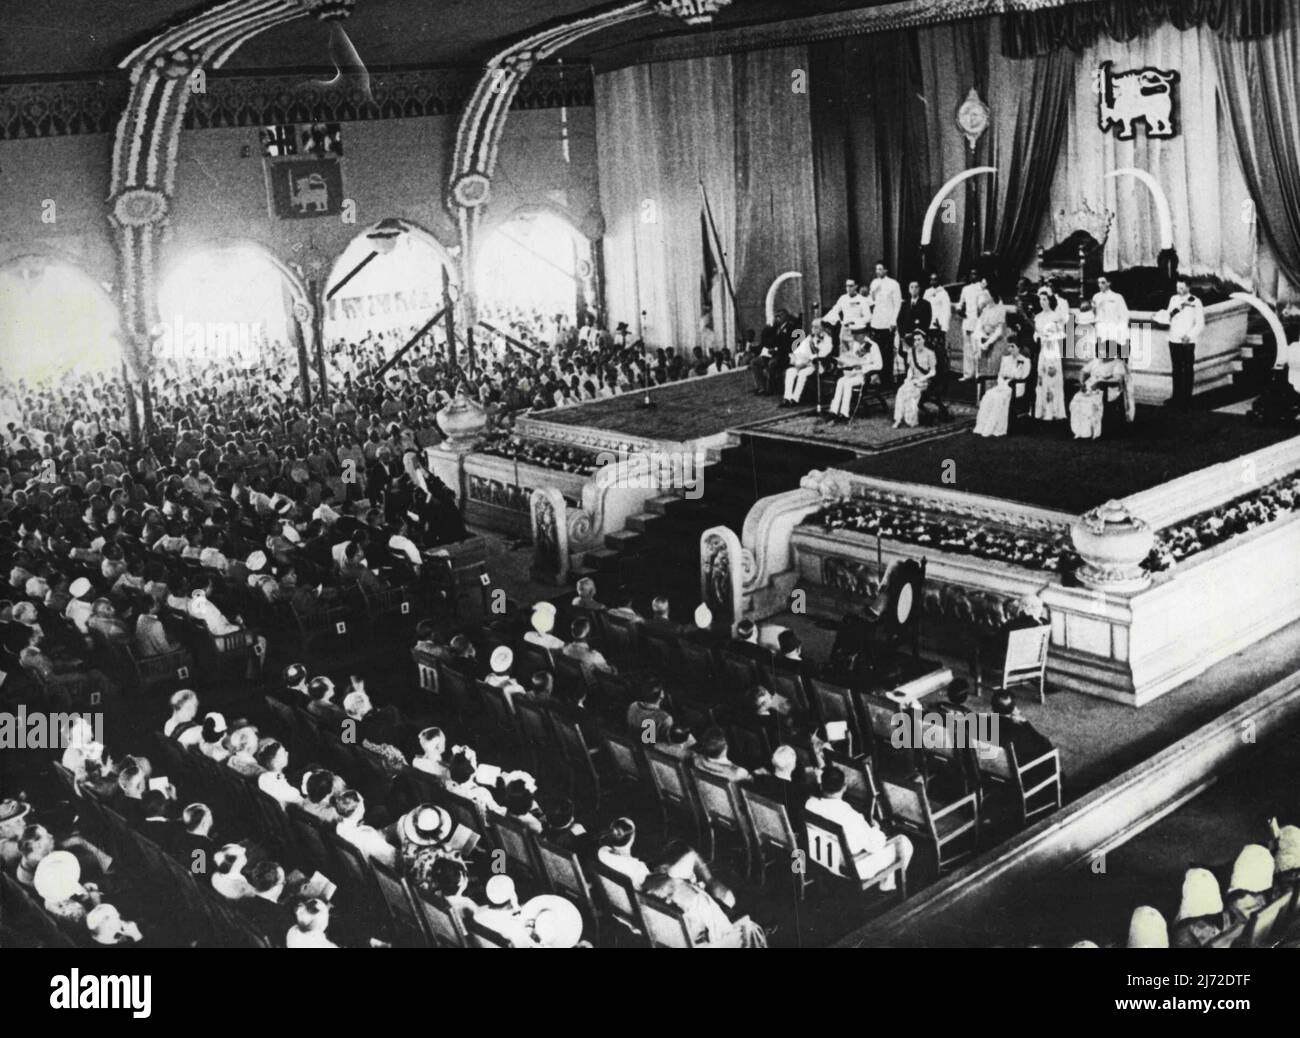 Sri Lanka Independence February 27 1948 Photo By The Associated Press Ltd 2J72DTF 